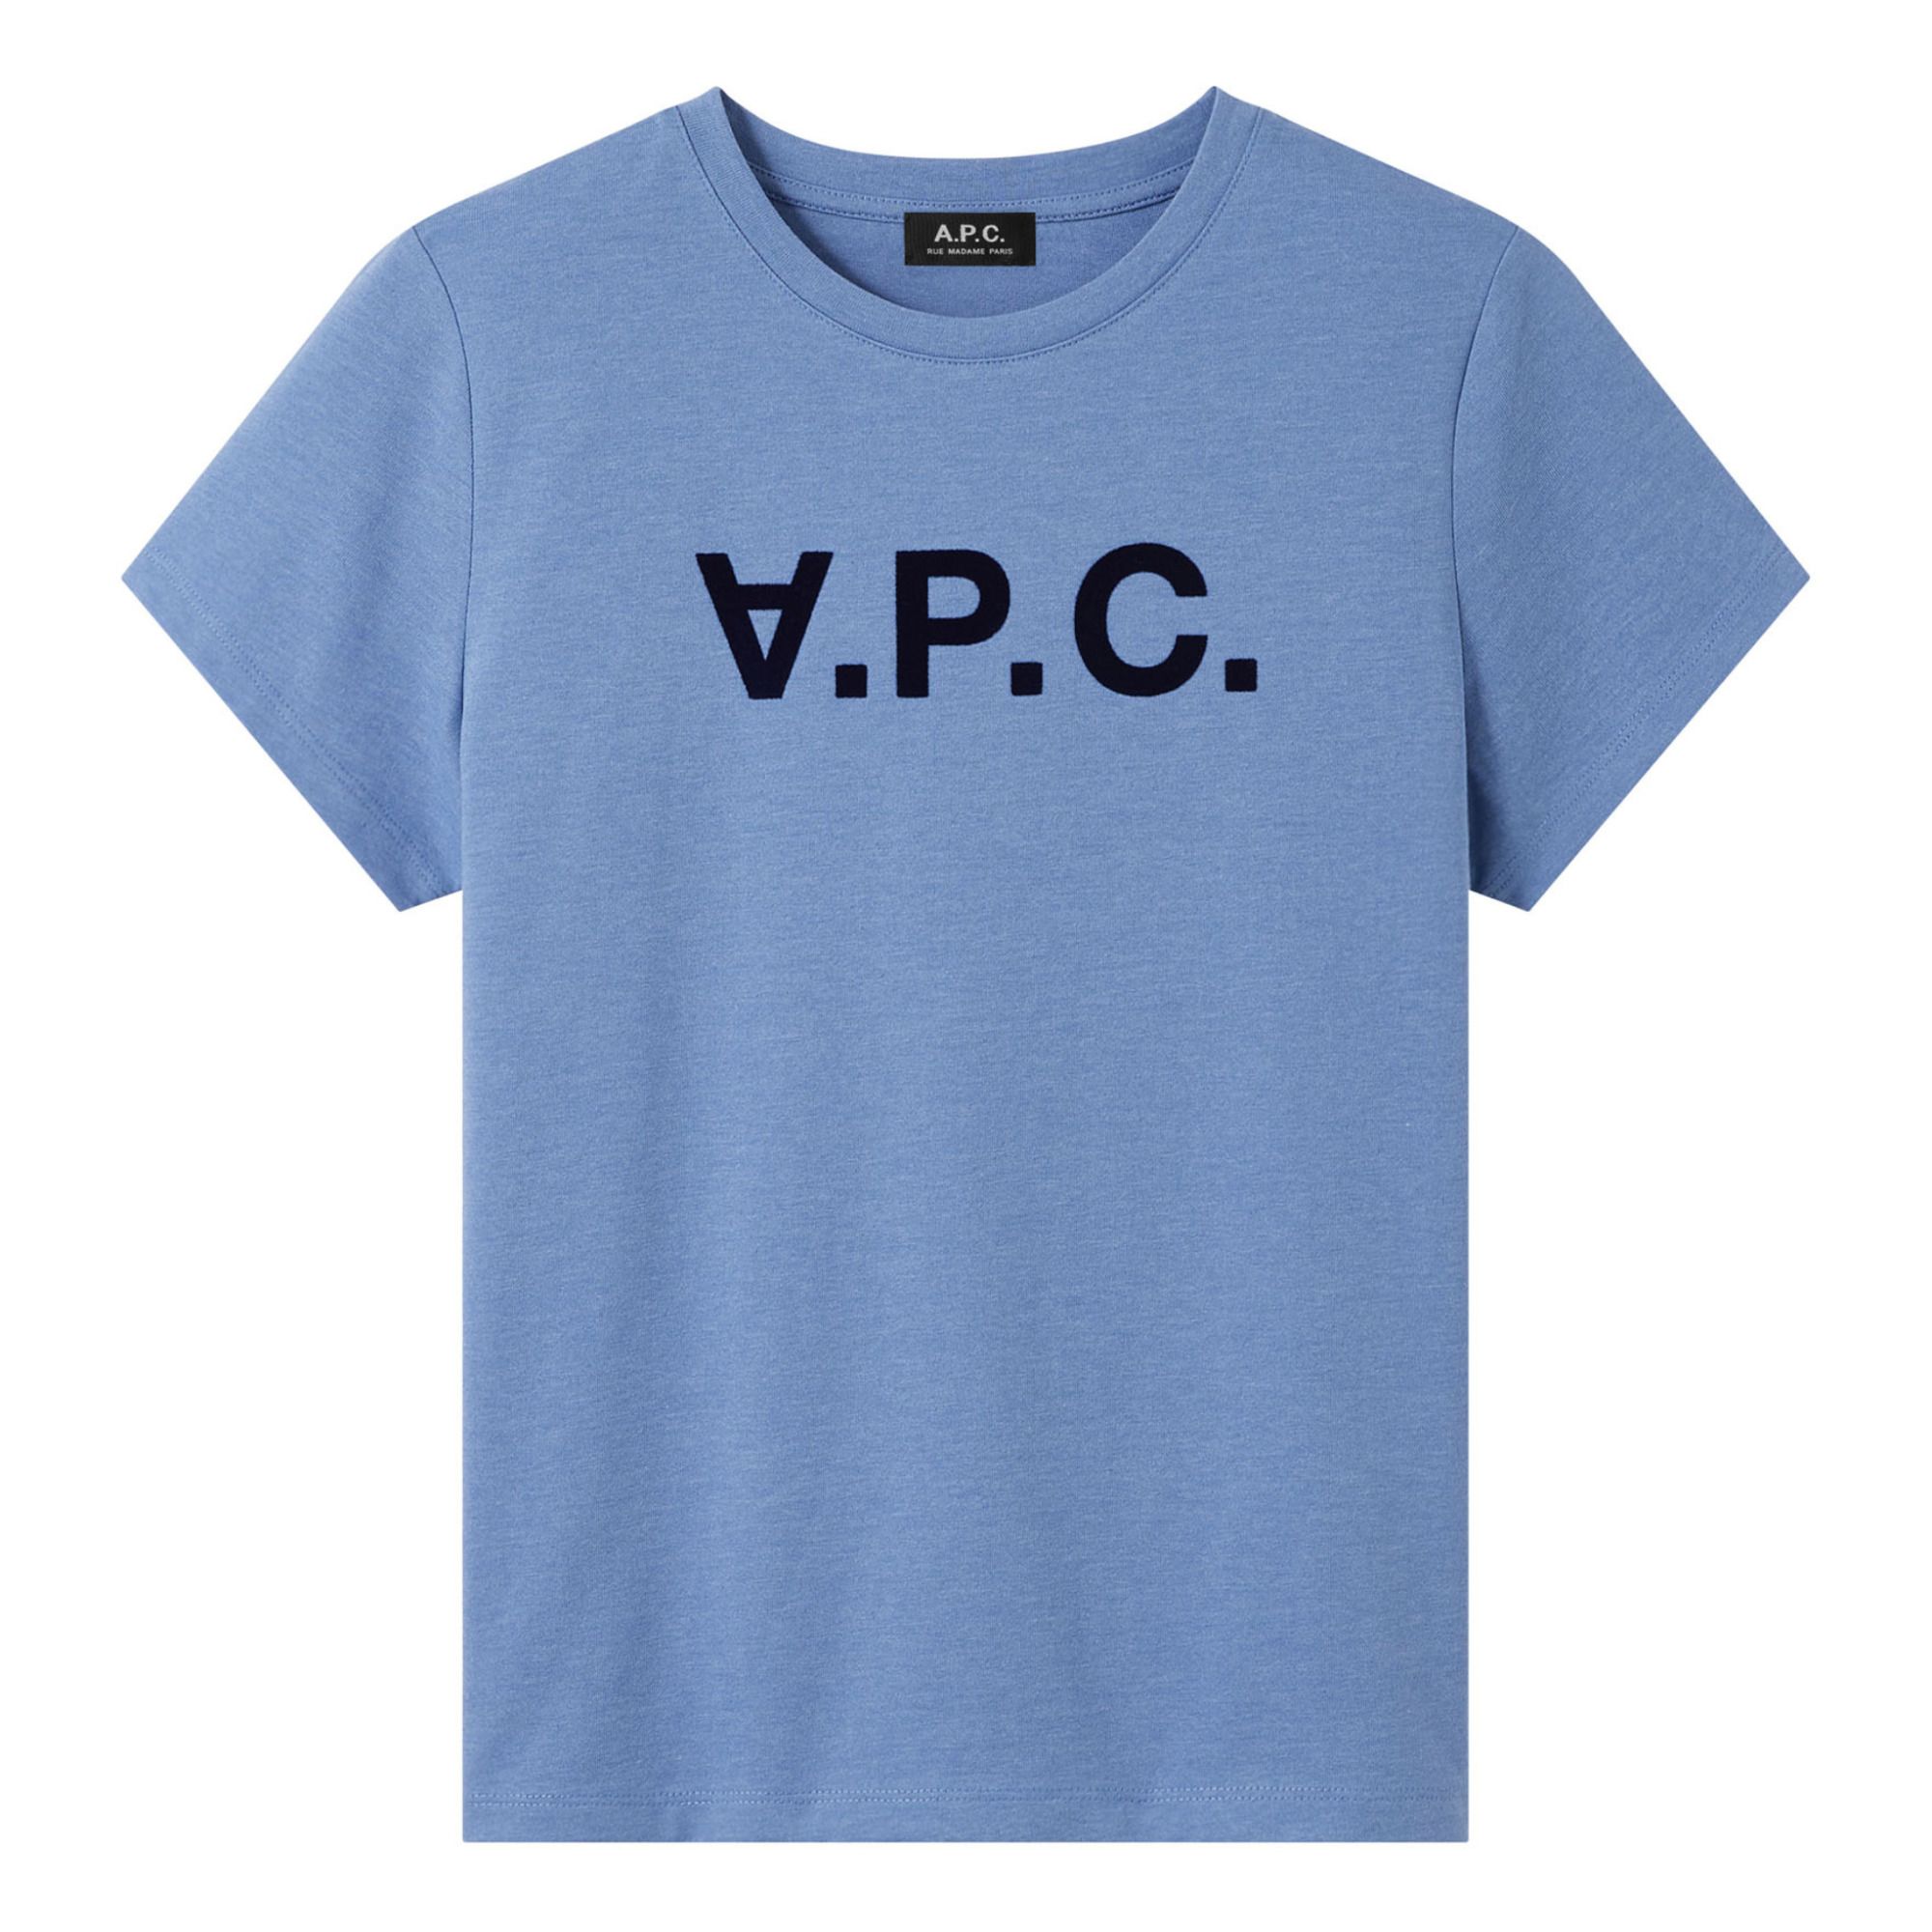 A.P.C. - T-shirt VPC Color F - Femme - Bleu